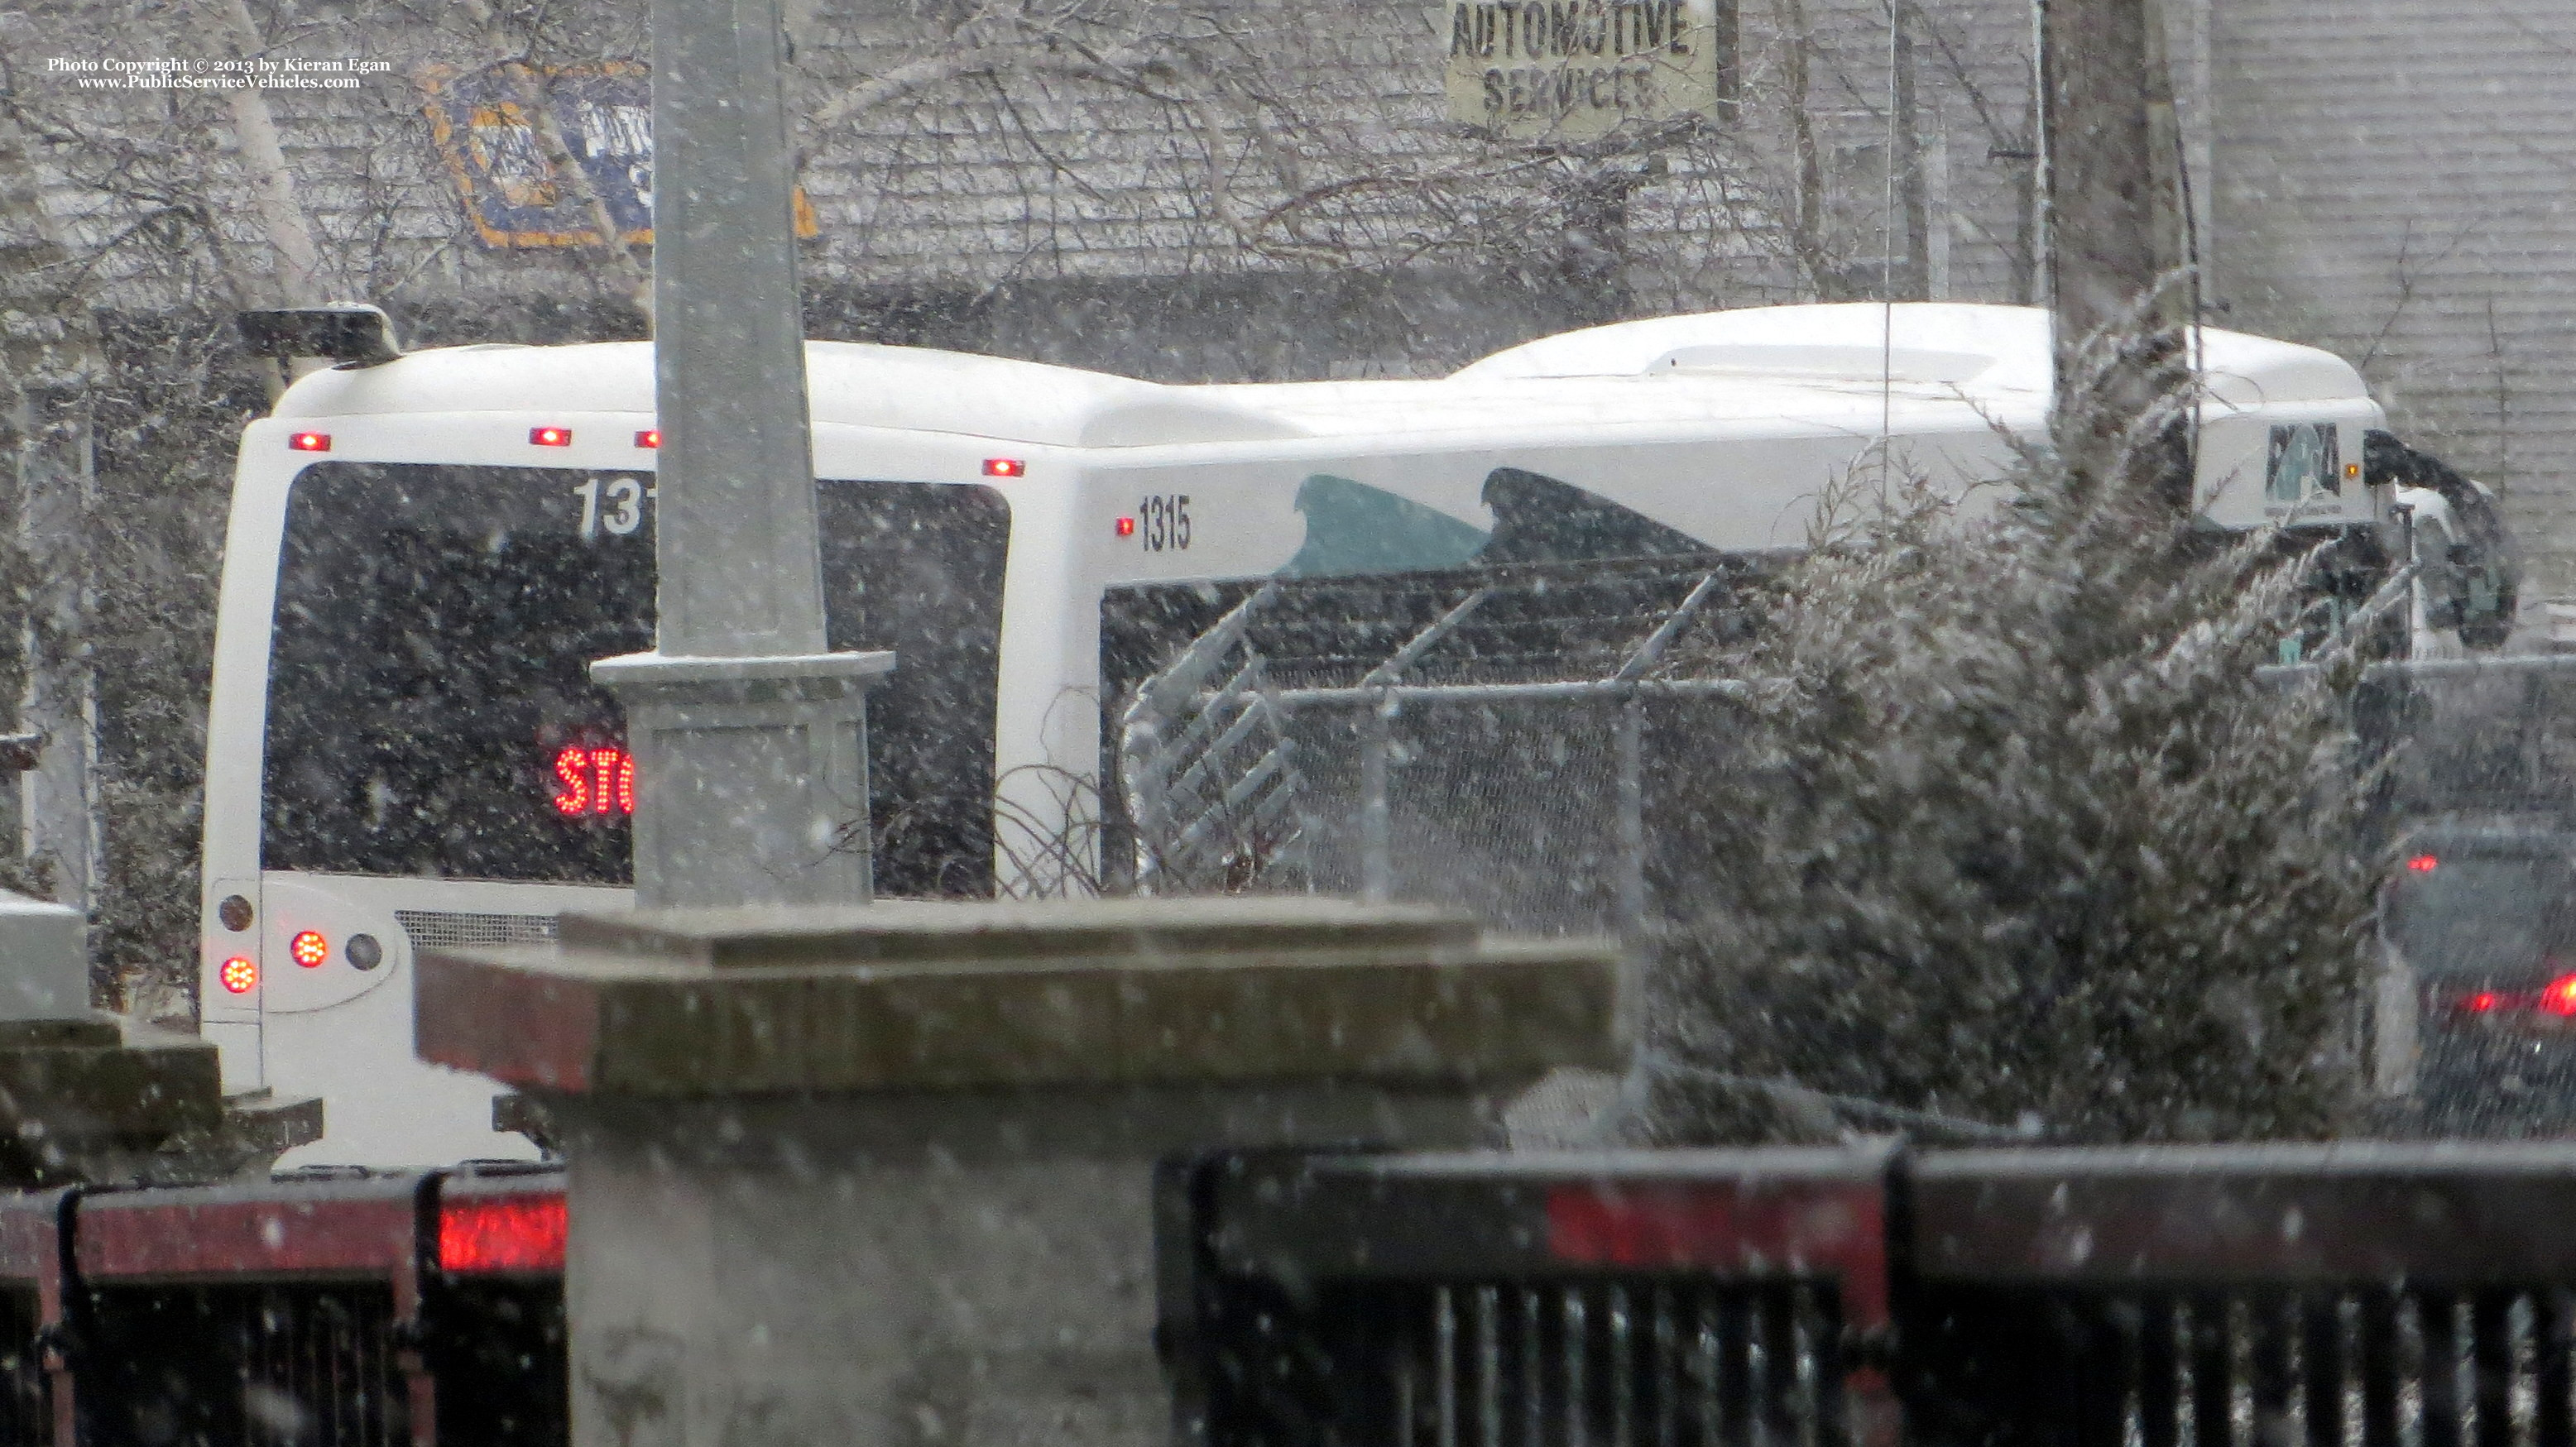 A photo  of Rhode Island Public Transit Authority
            Bus 1315, a 2013 Gillig BRT             taken by Kieran Egan